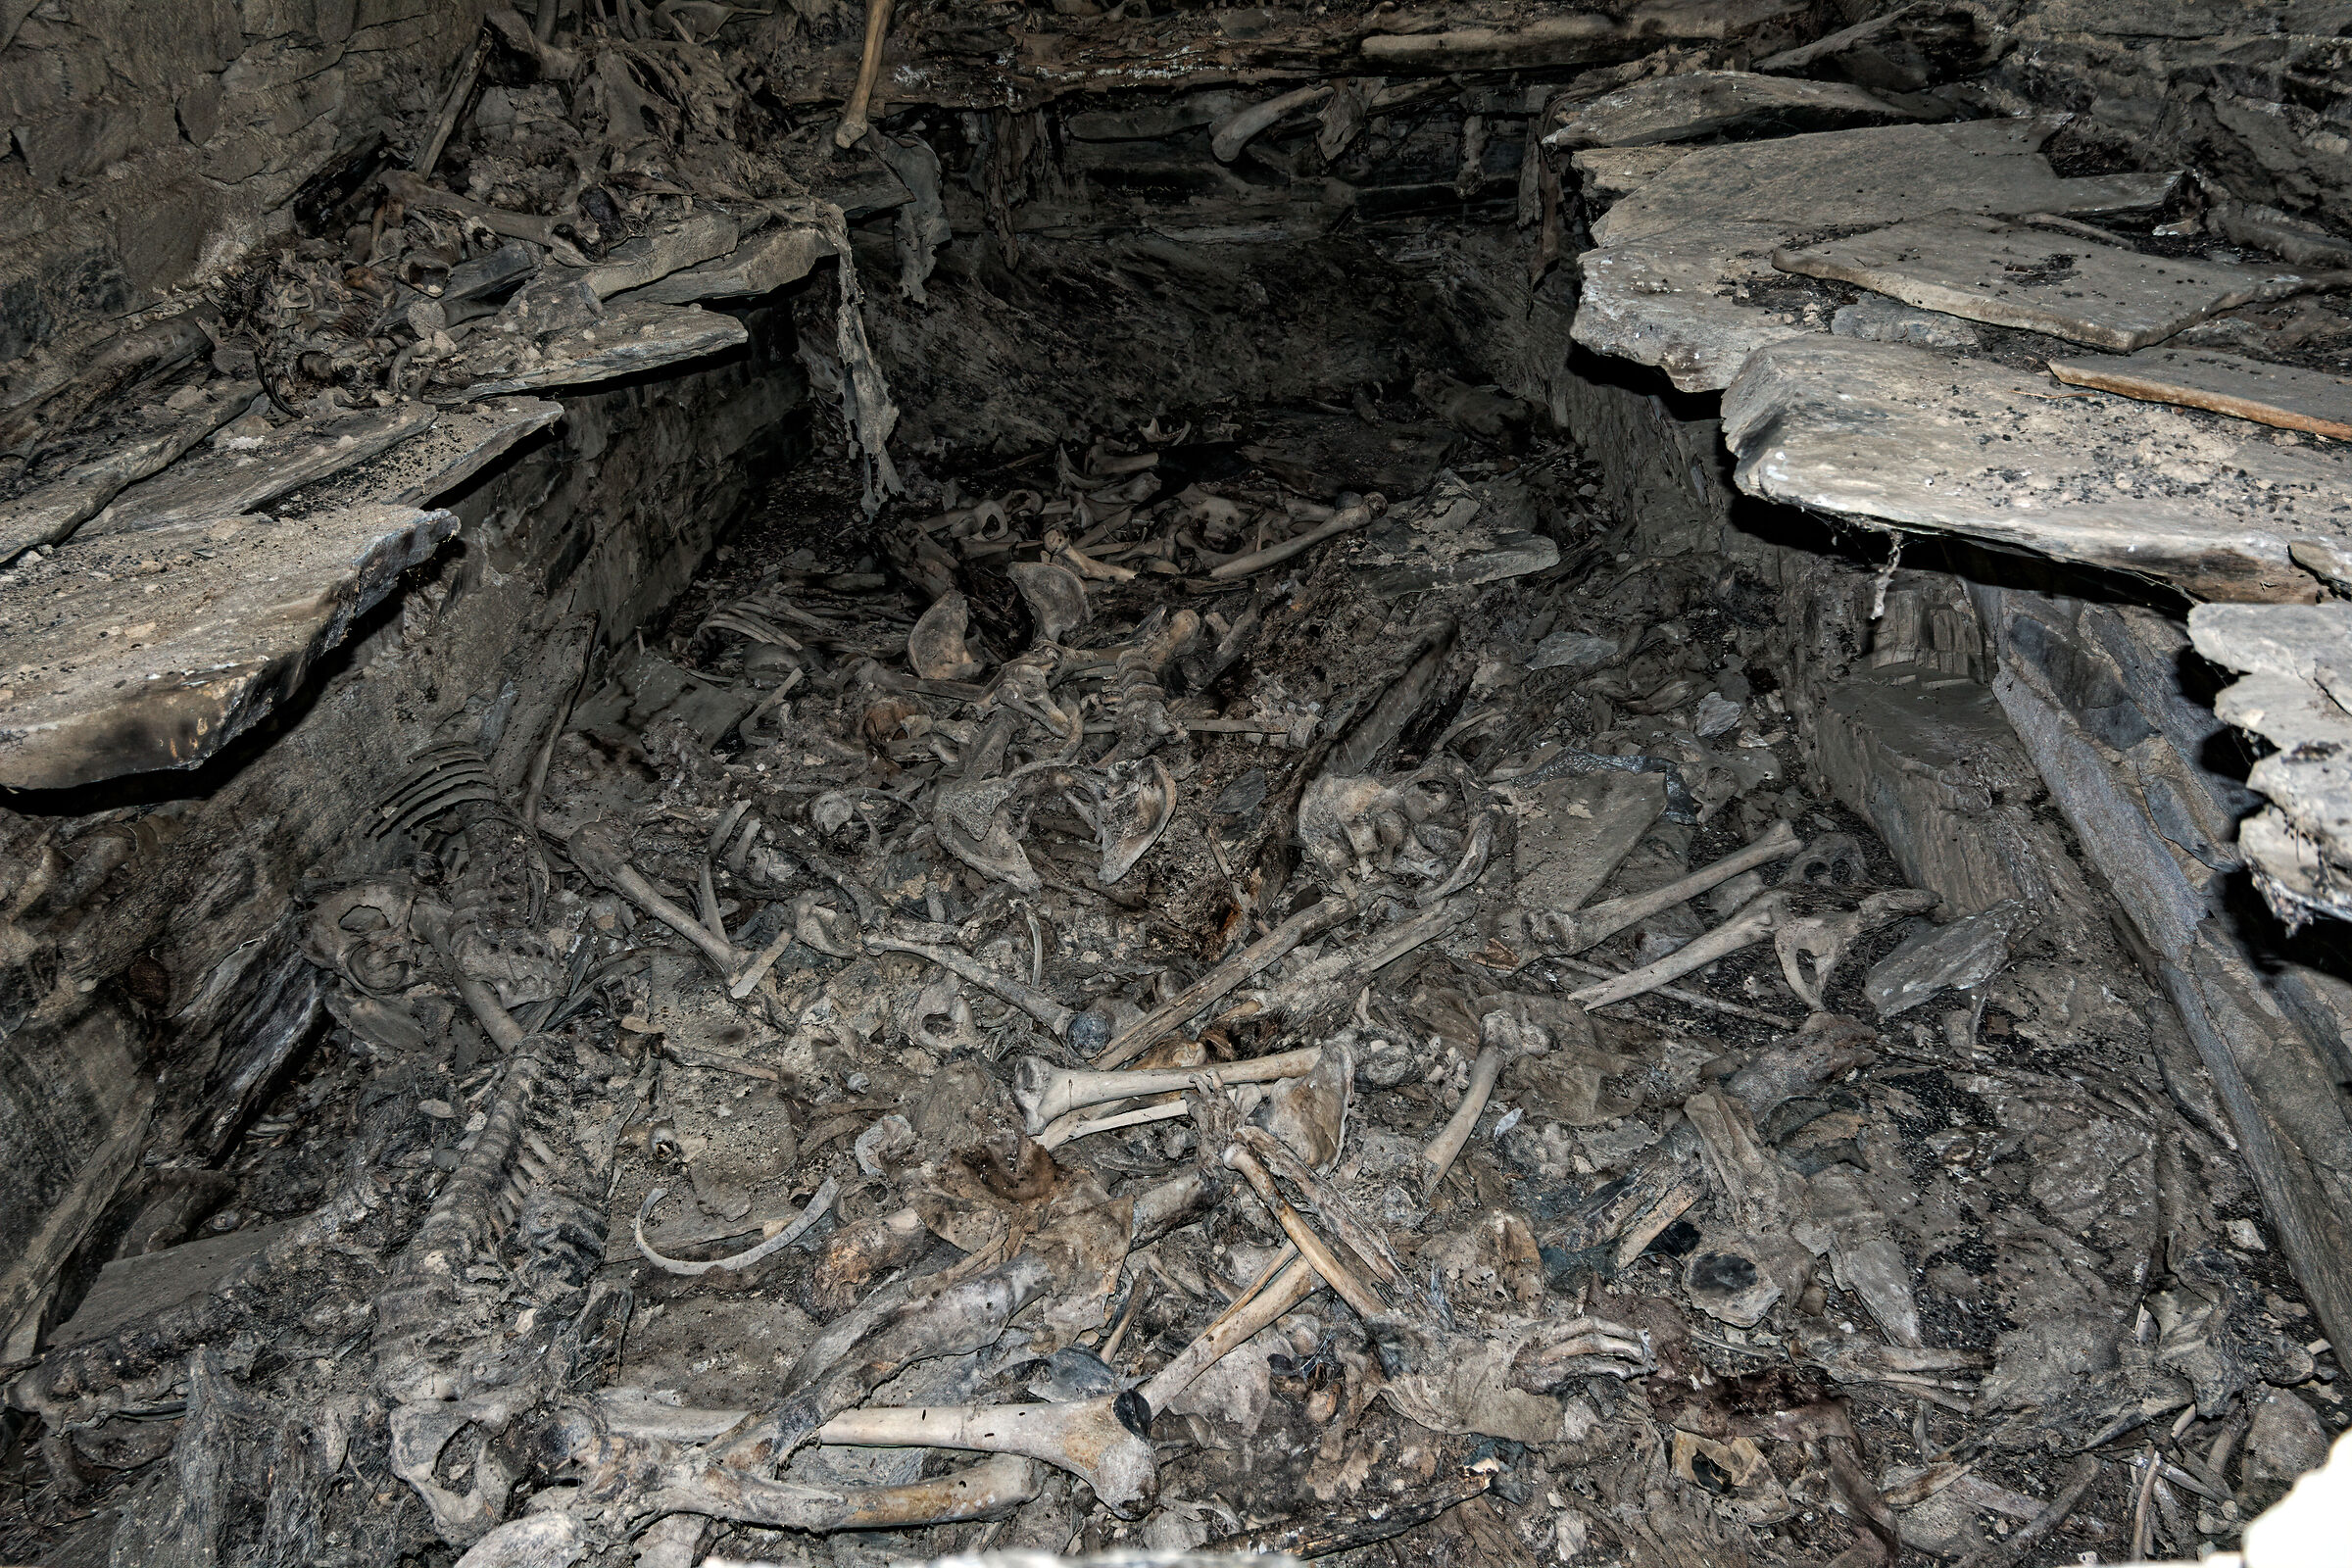 Anatori, human remains buried after the plague of 1800...